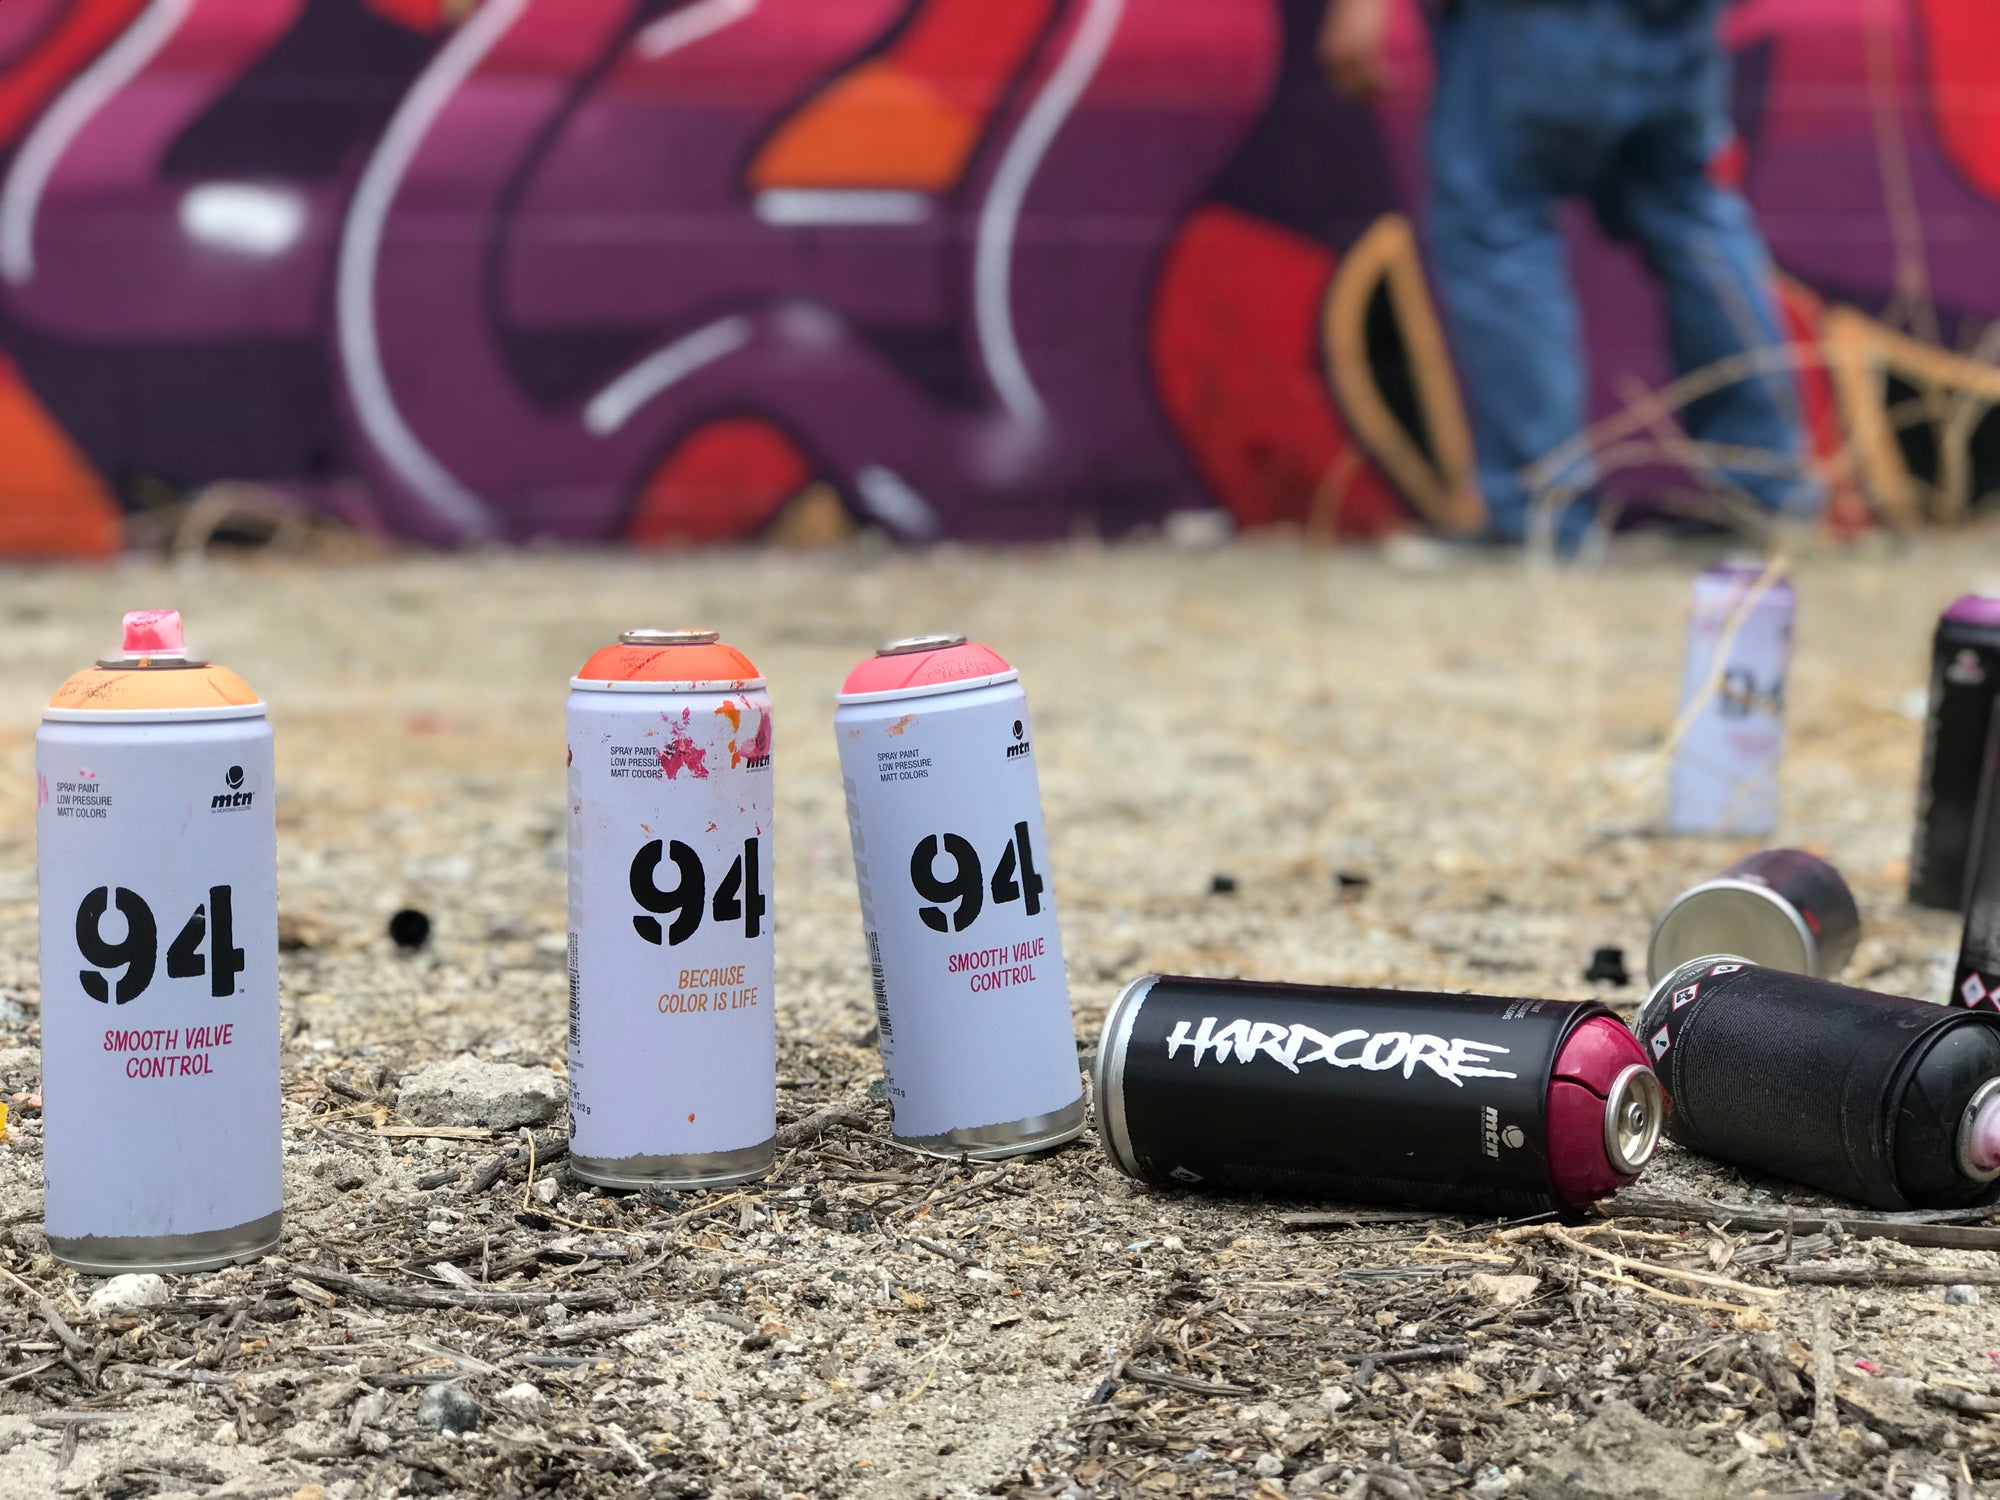 Montana Cans - Montana BLACK High-Pressure Cans Spray Color